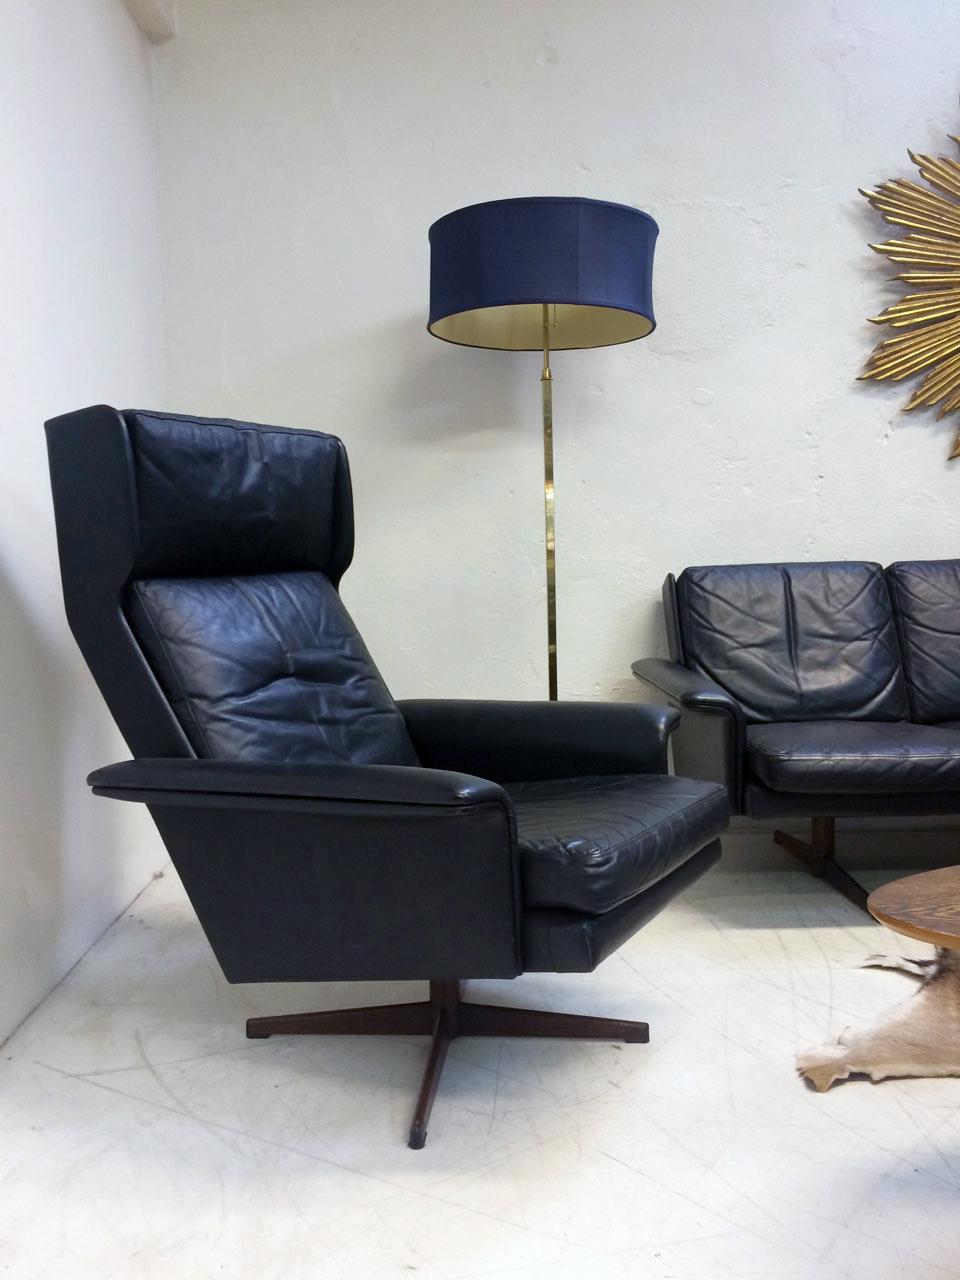 Mid-Century Modern Midcentury Danish Leather 3-piece Lounge Suite by Komfort designed HW Klein 60s